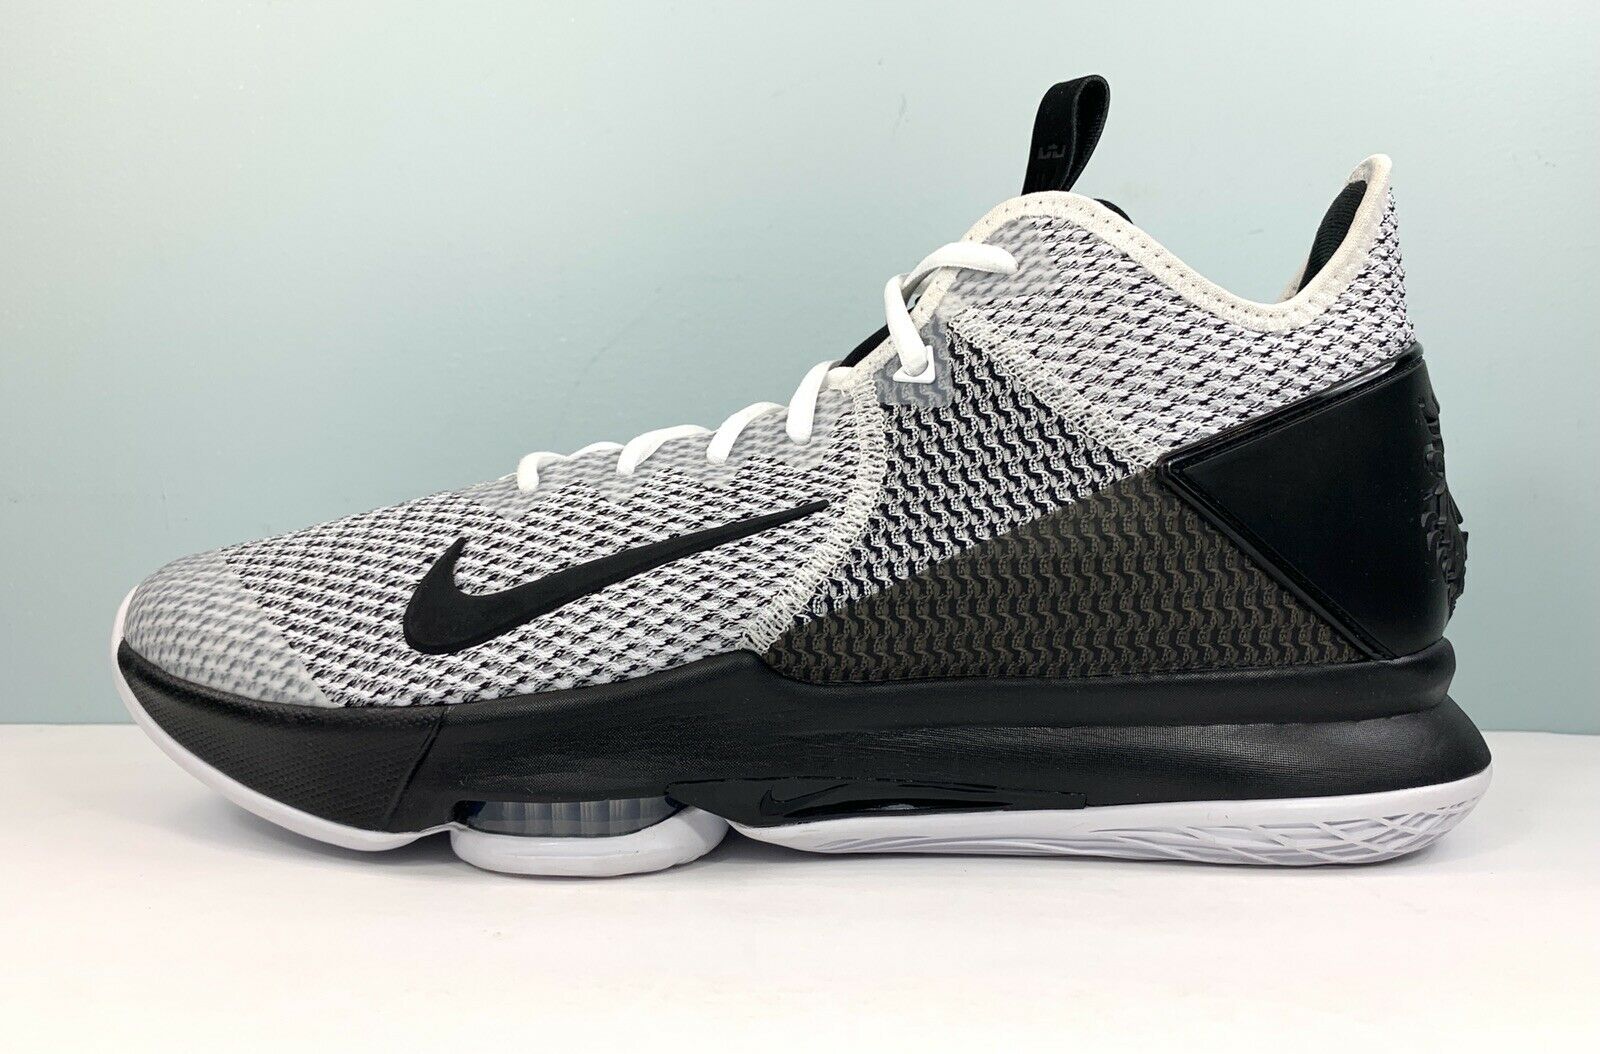 Nike LeBron James Witness IV Basketball Shoes White Black BV7427-101 Men Size 14